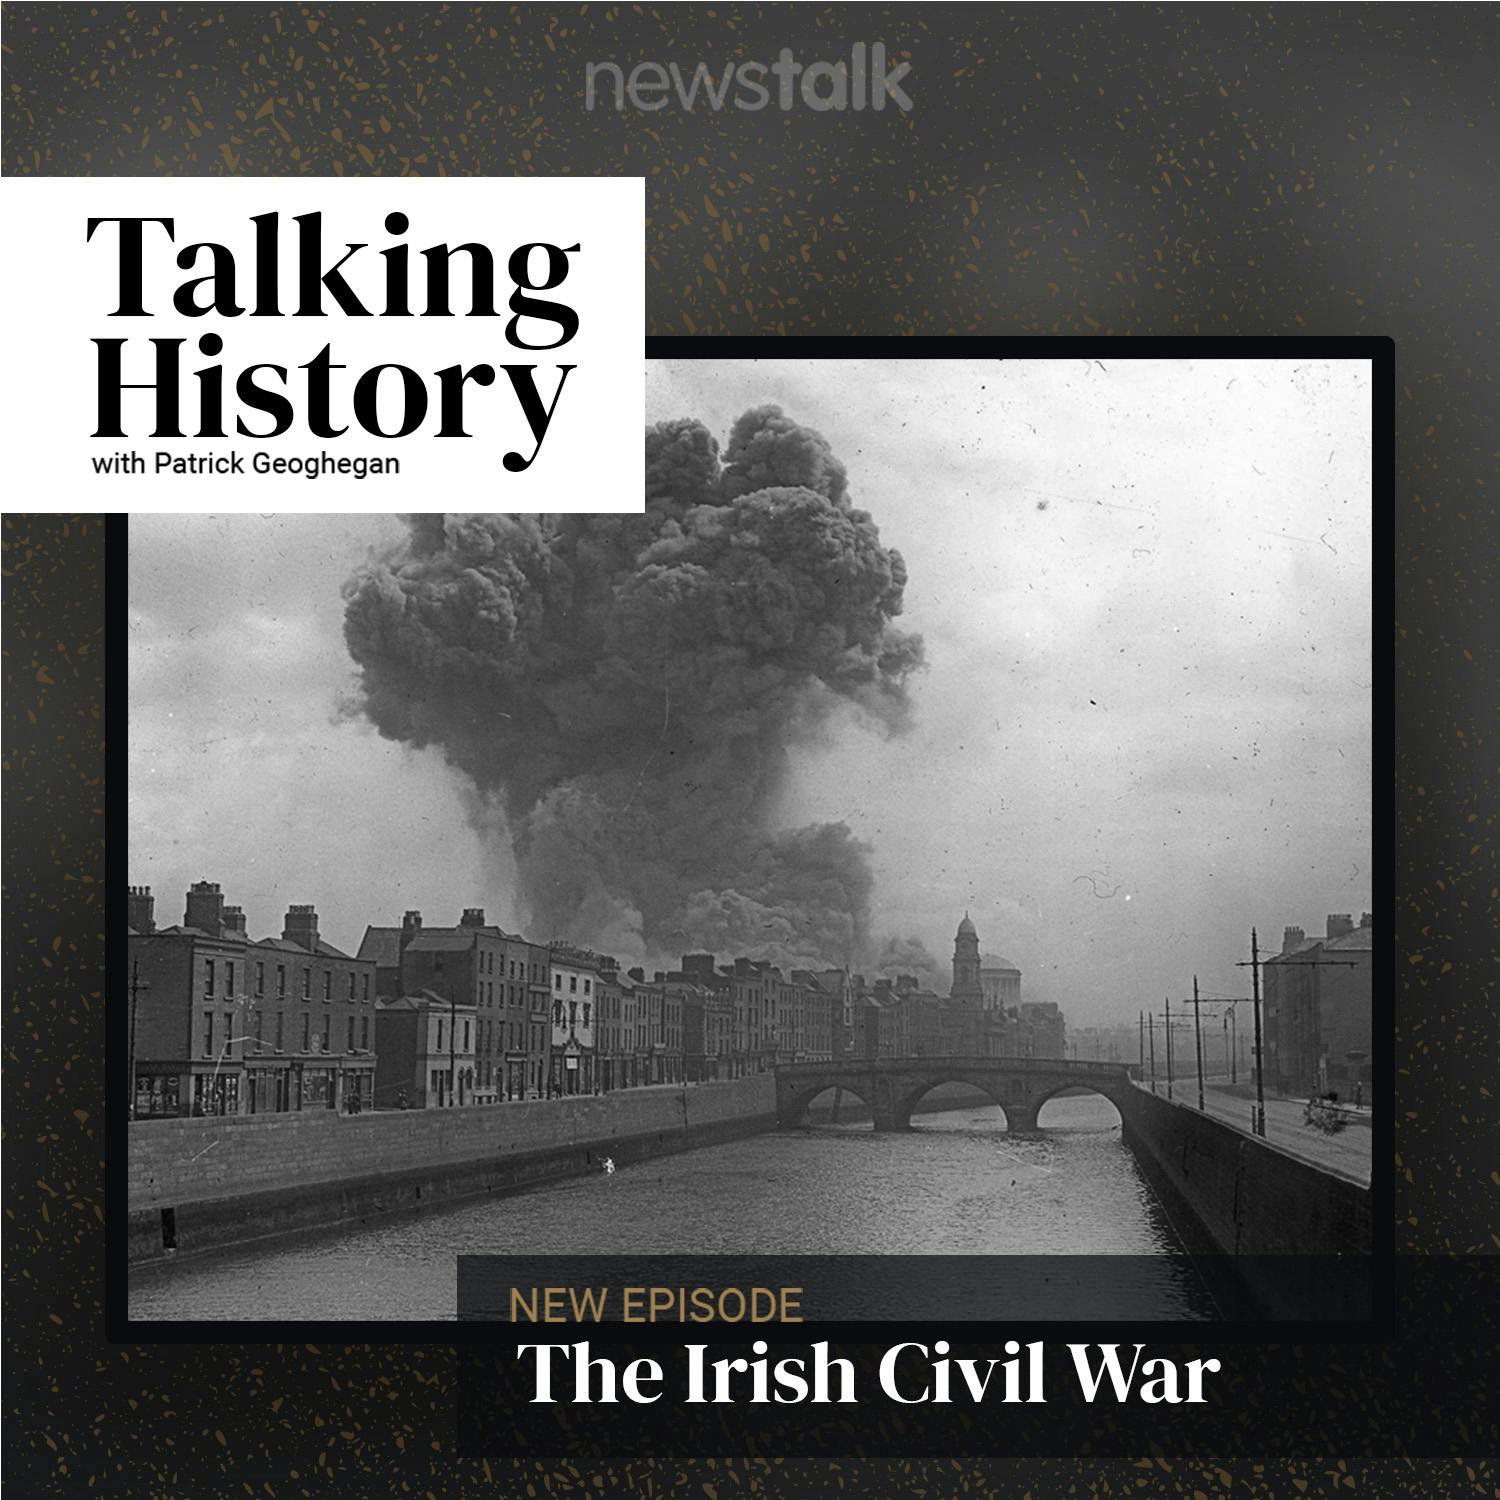 The Irish Civil War: How It Impacted Kerry